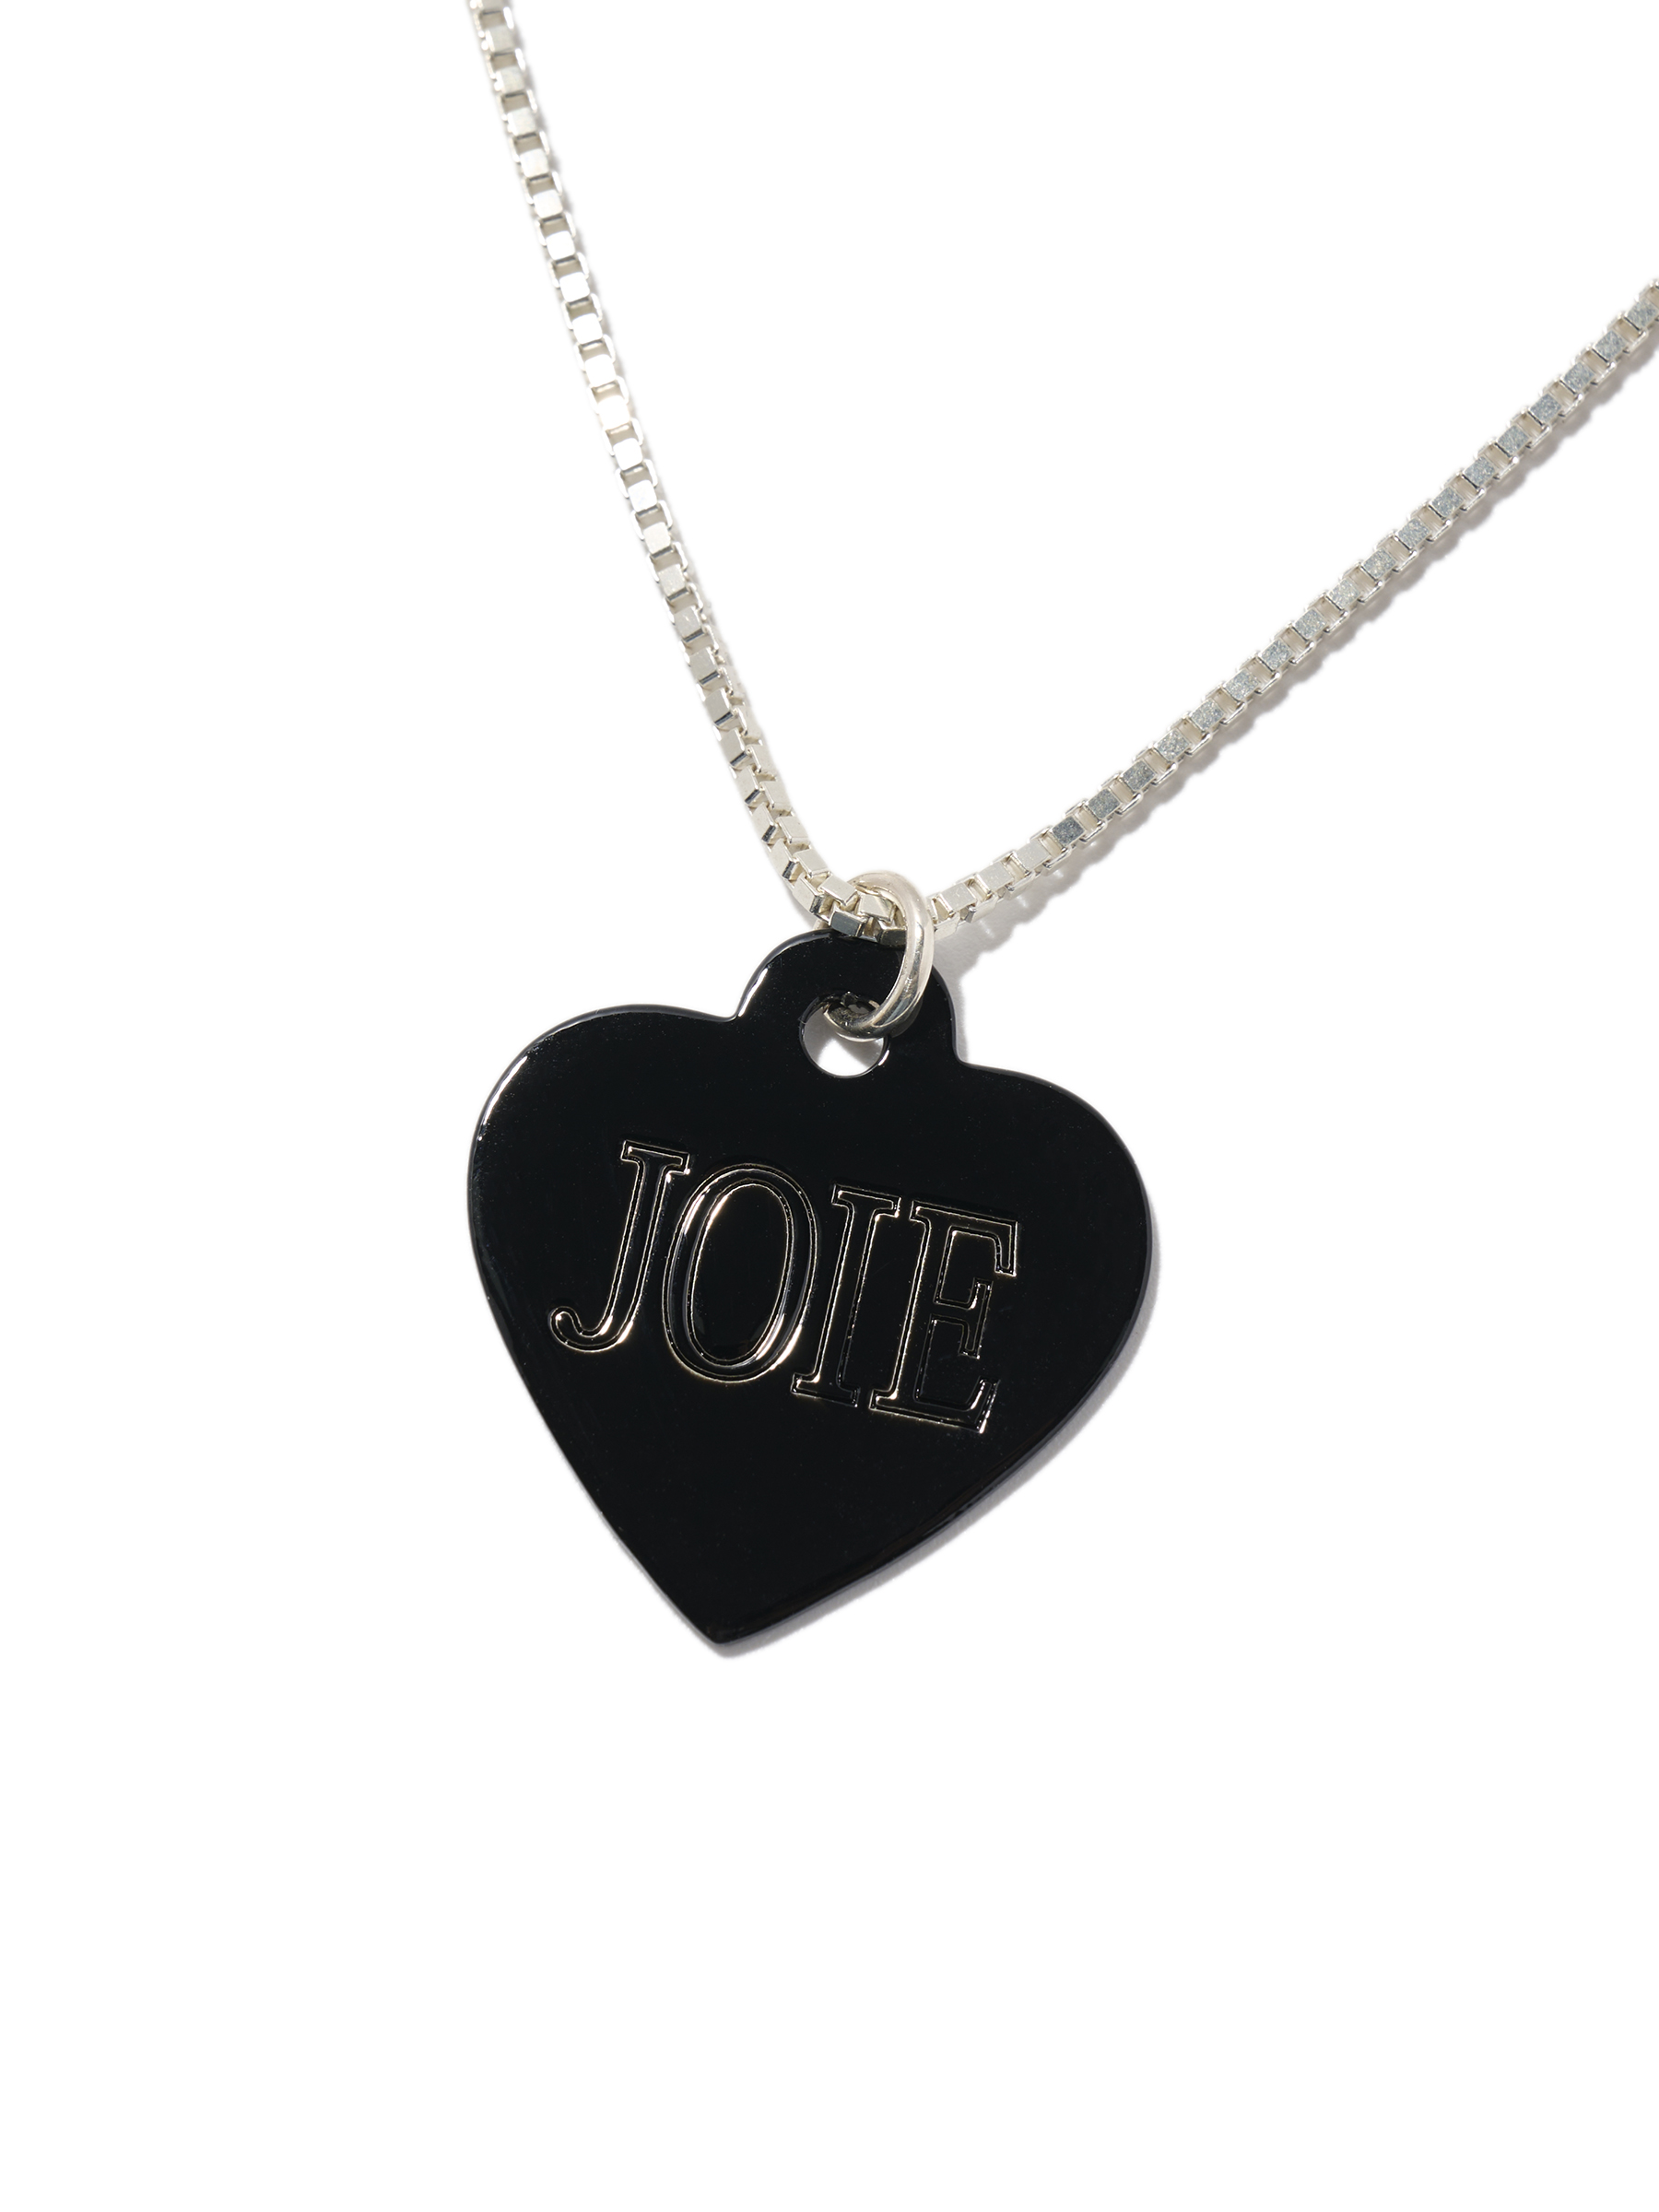 Joie heart Necklace (Black)